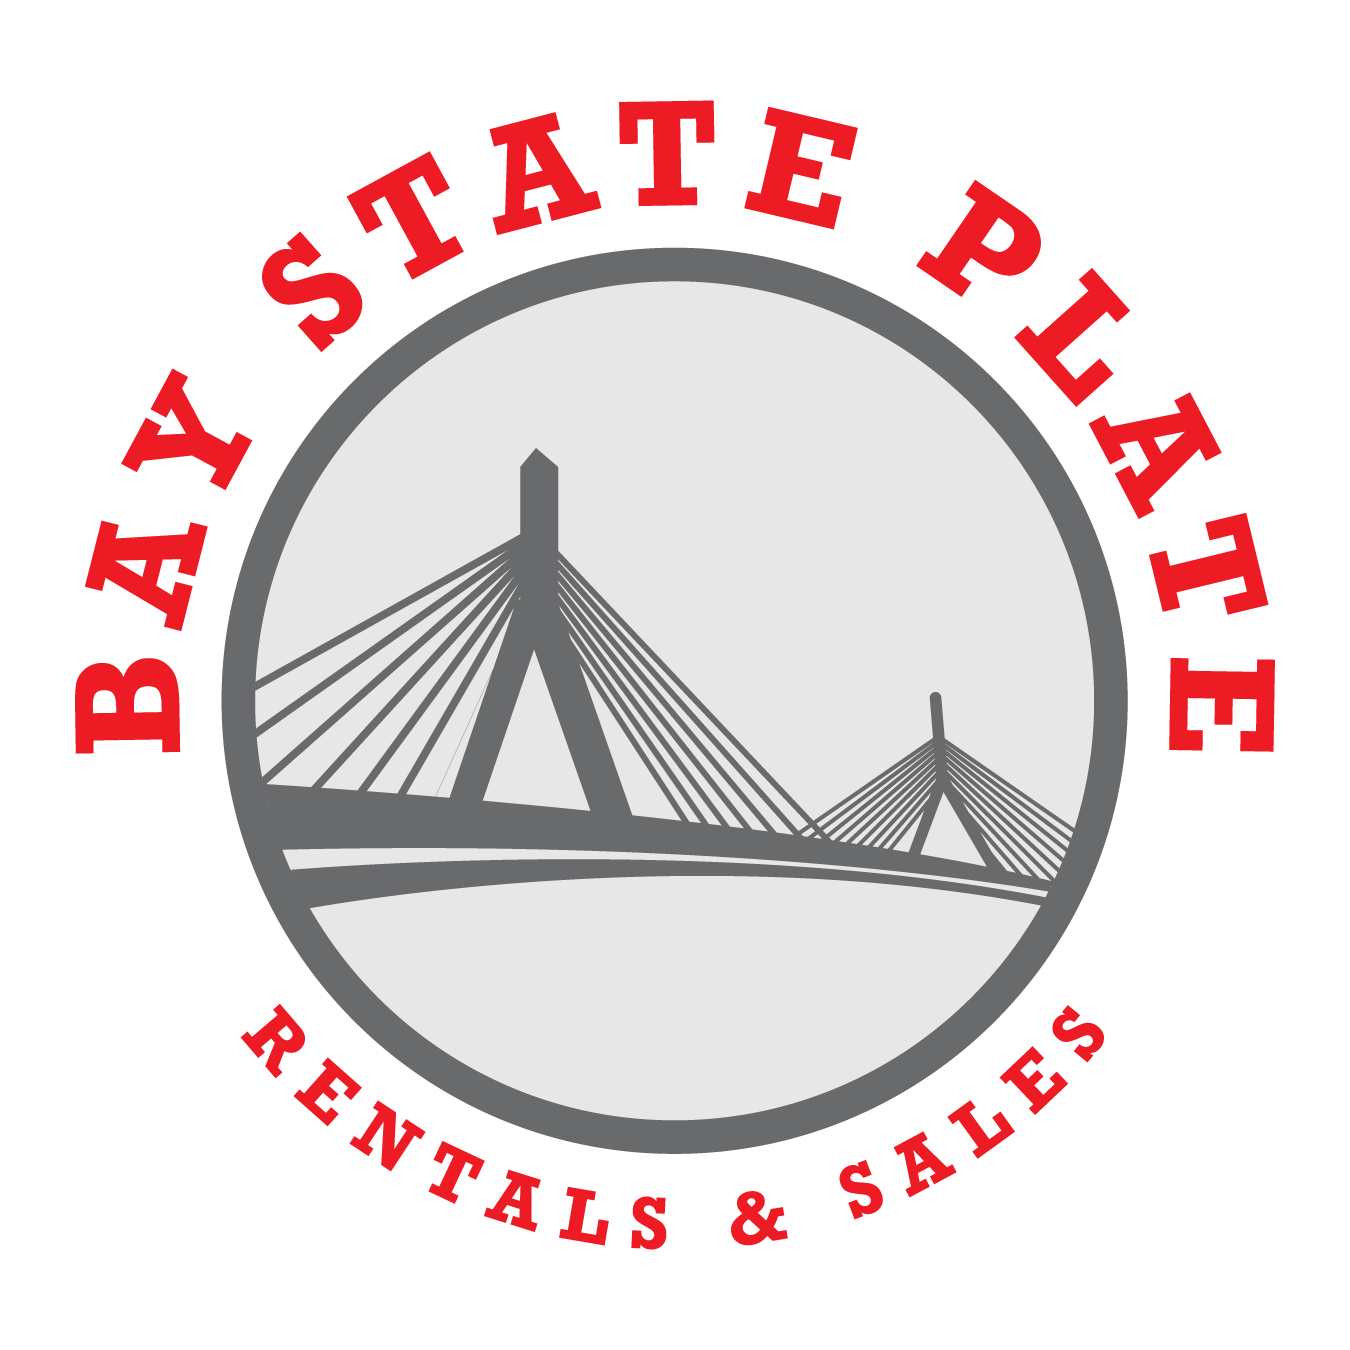 Bay State Plate Rentals & Sales LLC